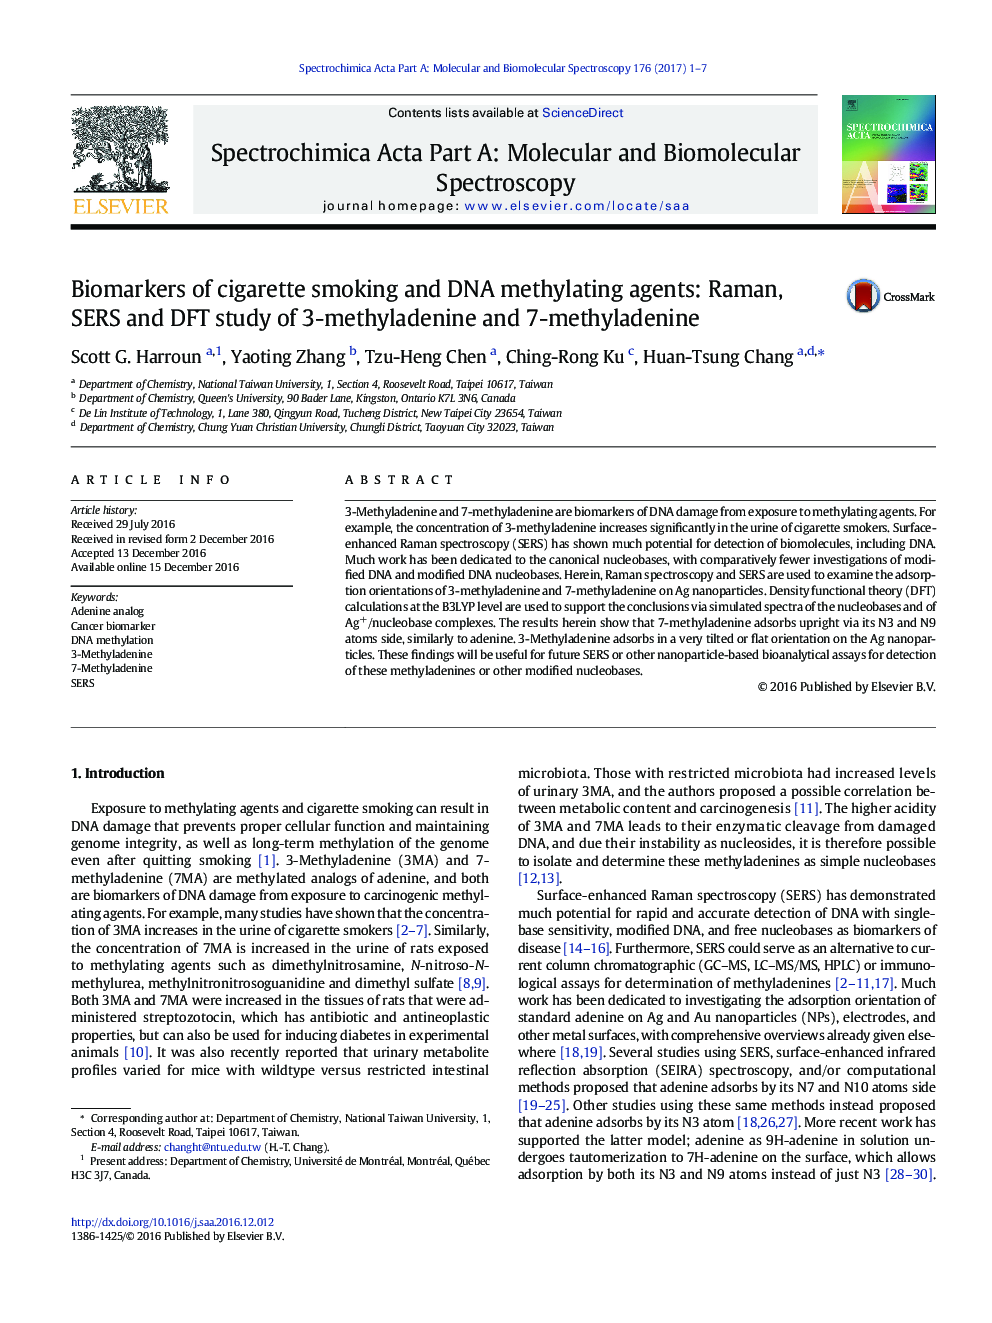 Biomarkers of cigarette smoking and DNA methylating agents: Raman, SERS and DFT study of 3-methyladenine and 7-methyladenine